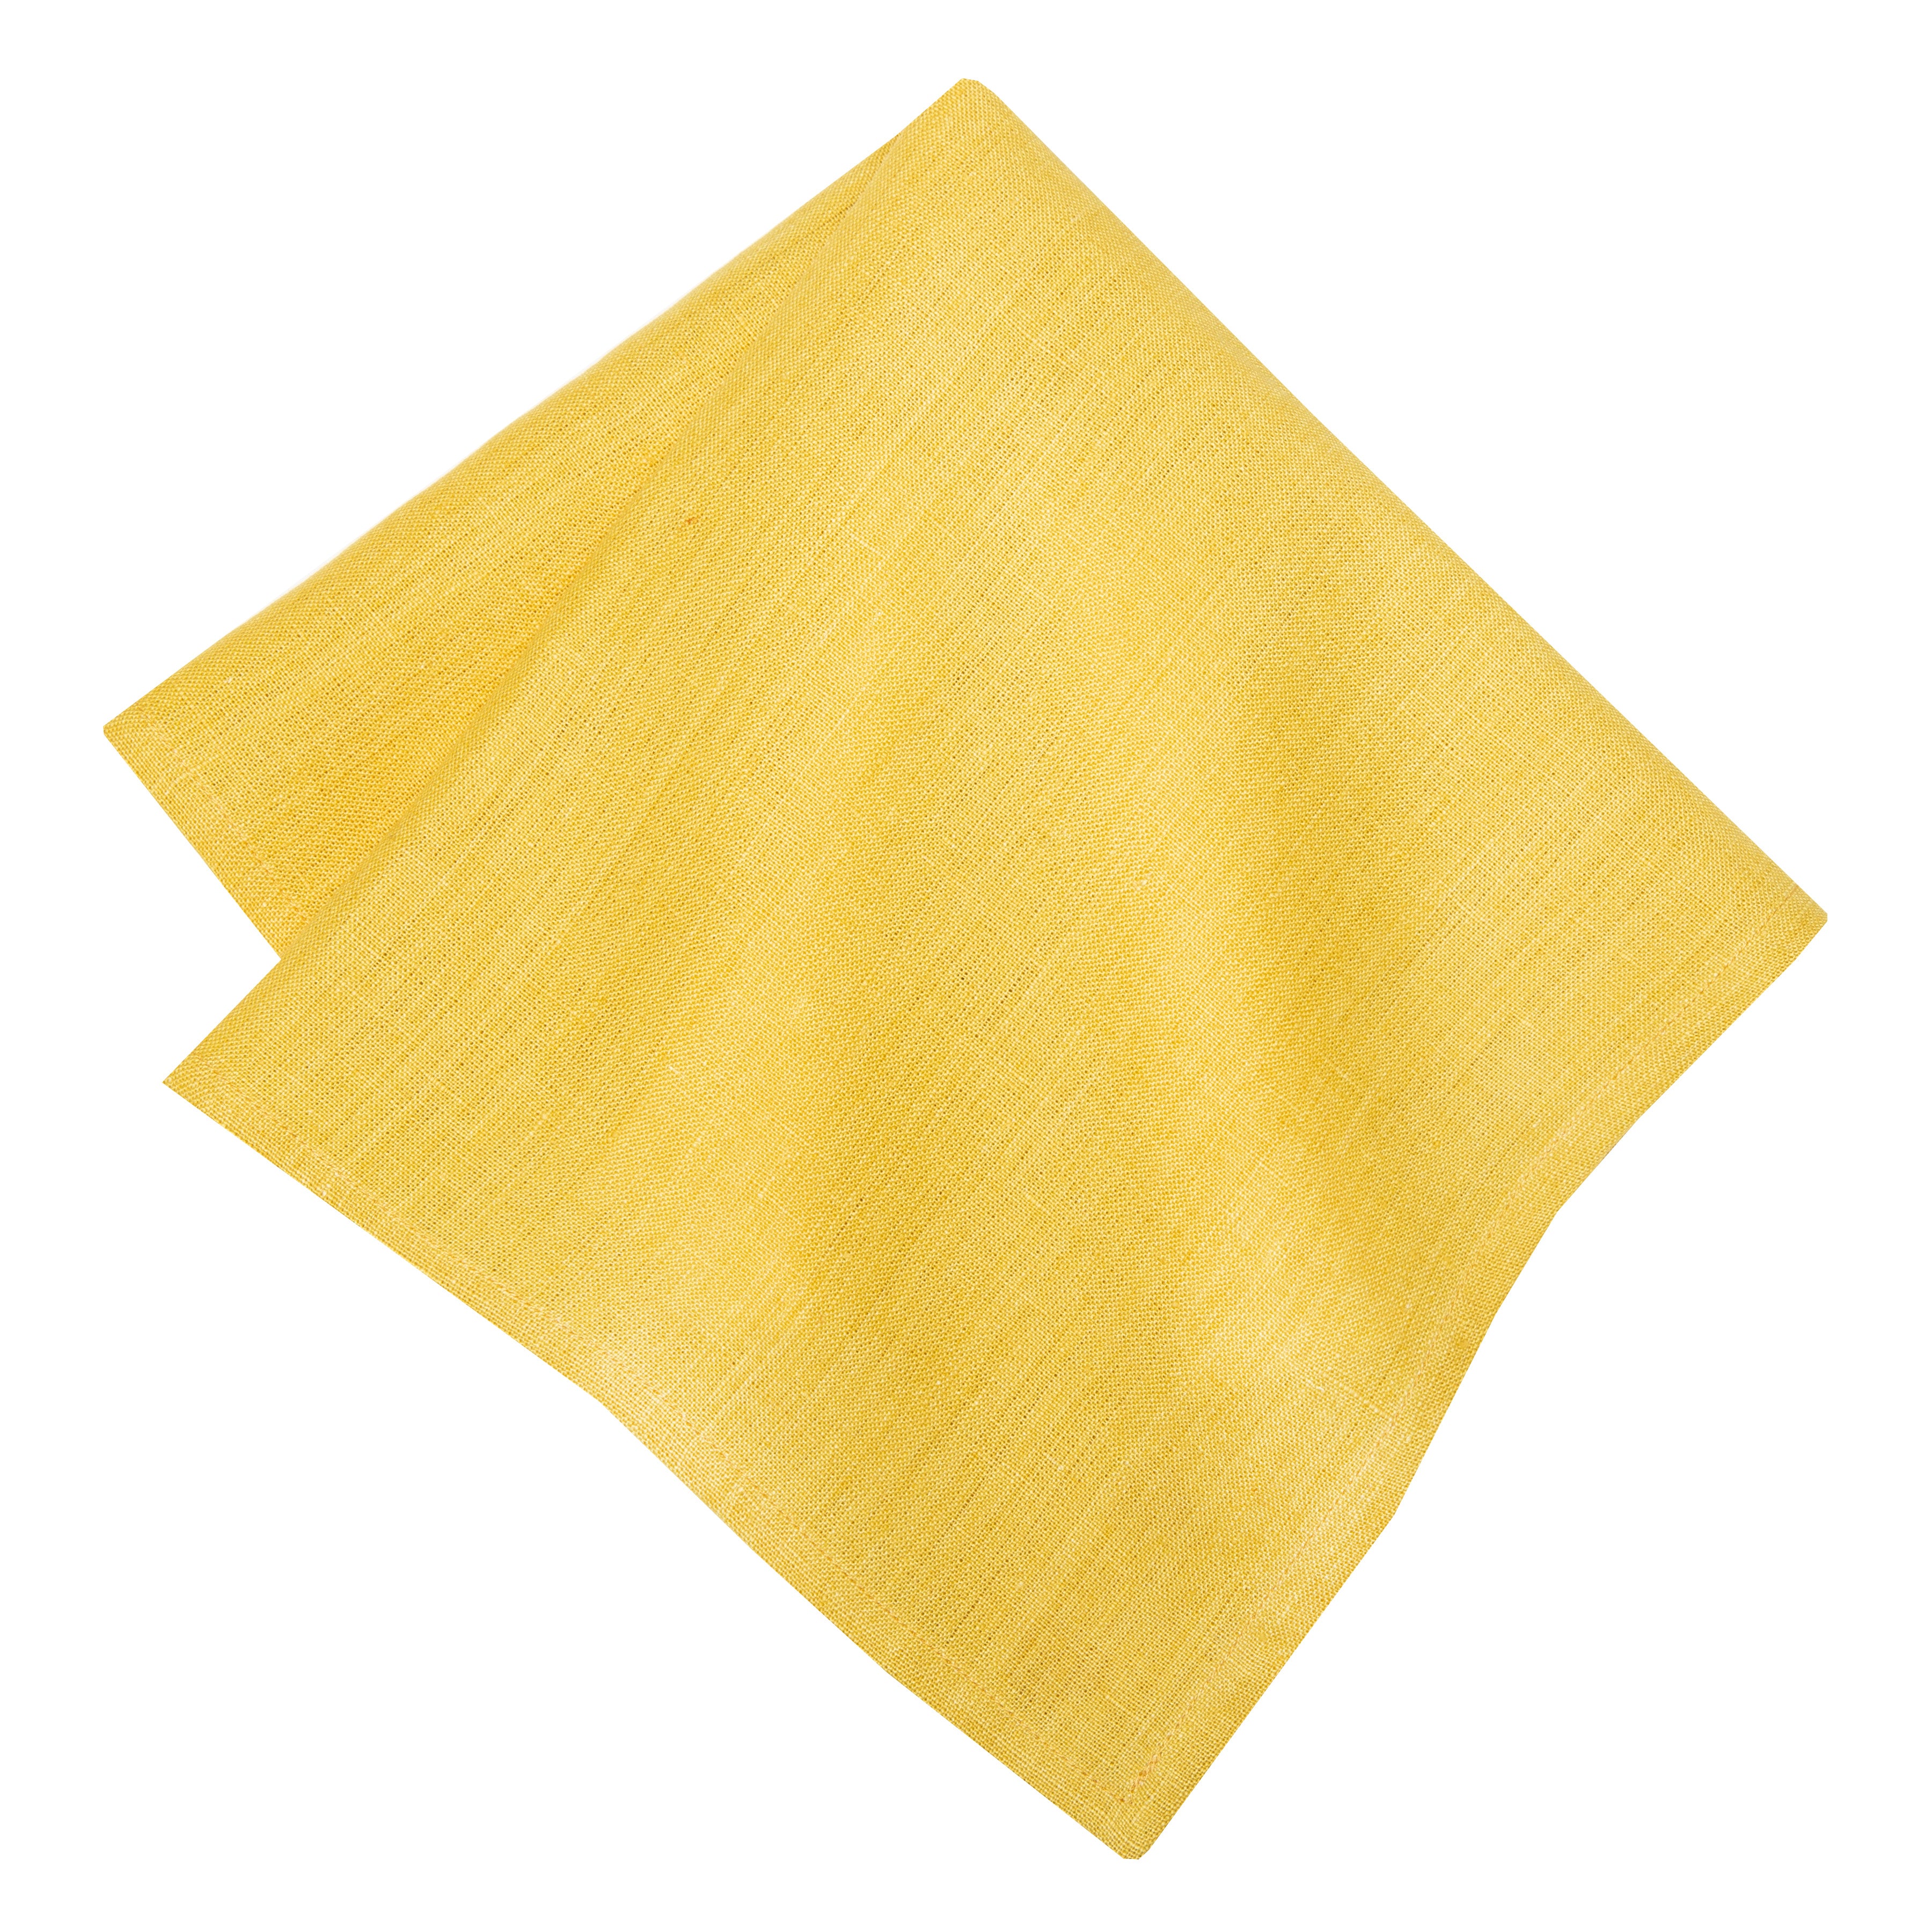 20x 20 Crushed Taffeta Napkin - Canary Yellow 61316(1pc)